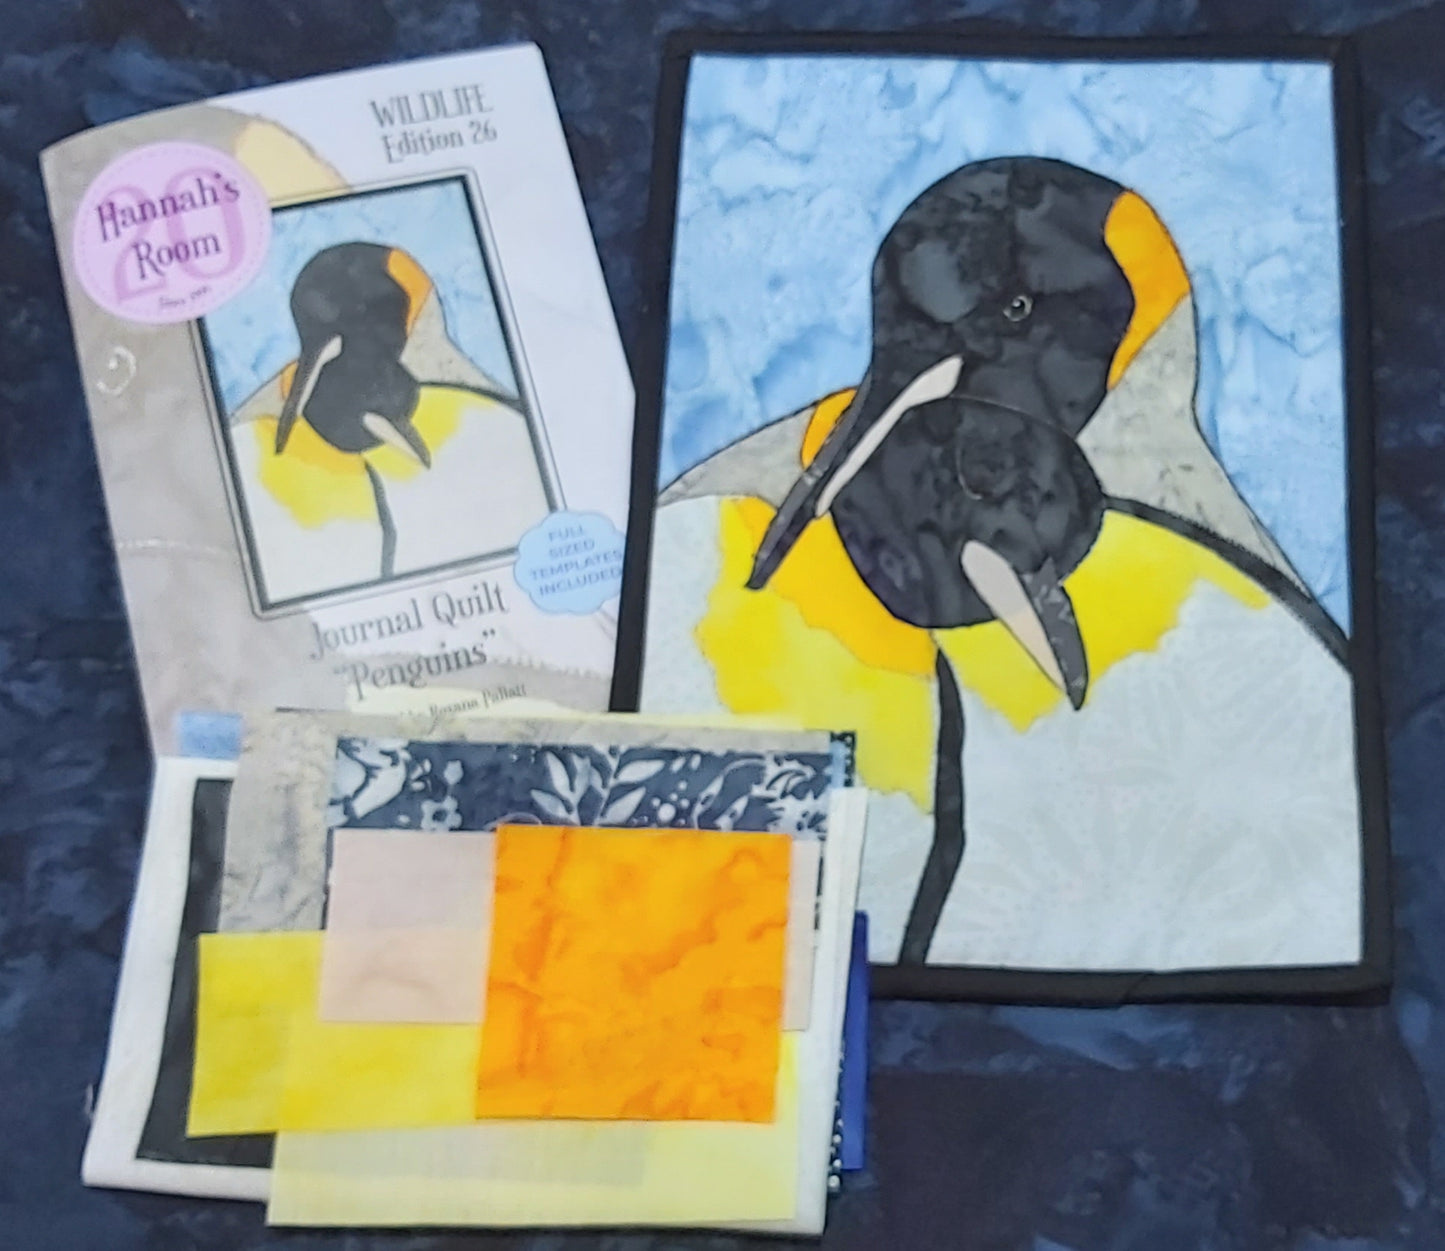 The Penguins Journal Quilt Kit or Pattern